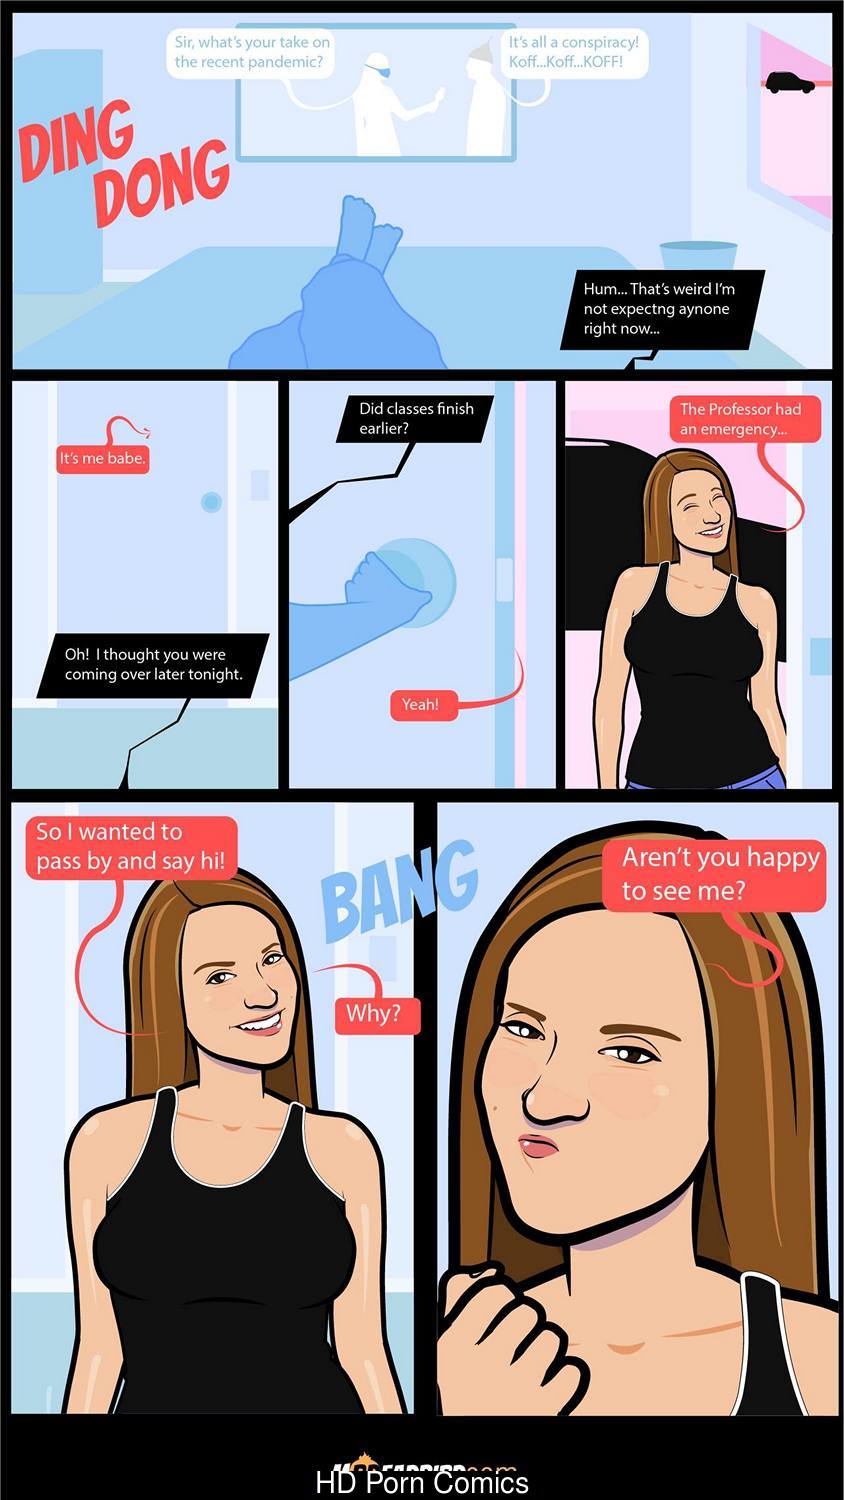 Pov Comic - POV Girlfriend comic porn â€“ HD Porn Comics